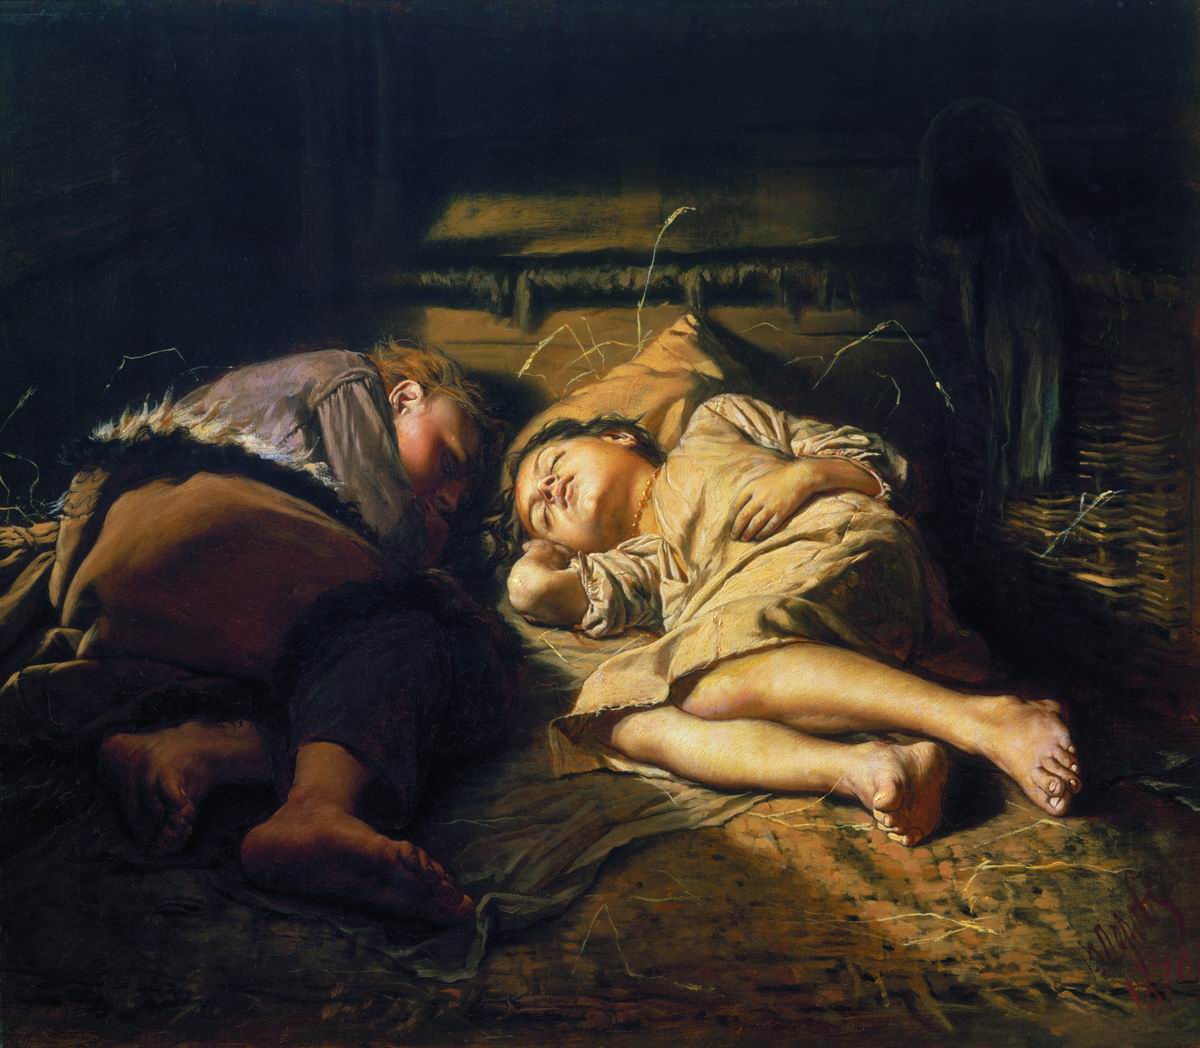 Vasily Perov, Sleeping children, 1870, oil on canvas, 53 × 61 cm, Tretyakov Gallery, Moscow